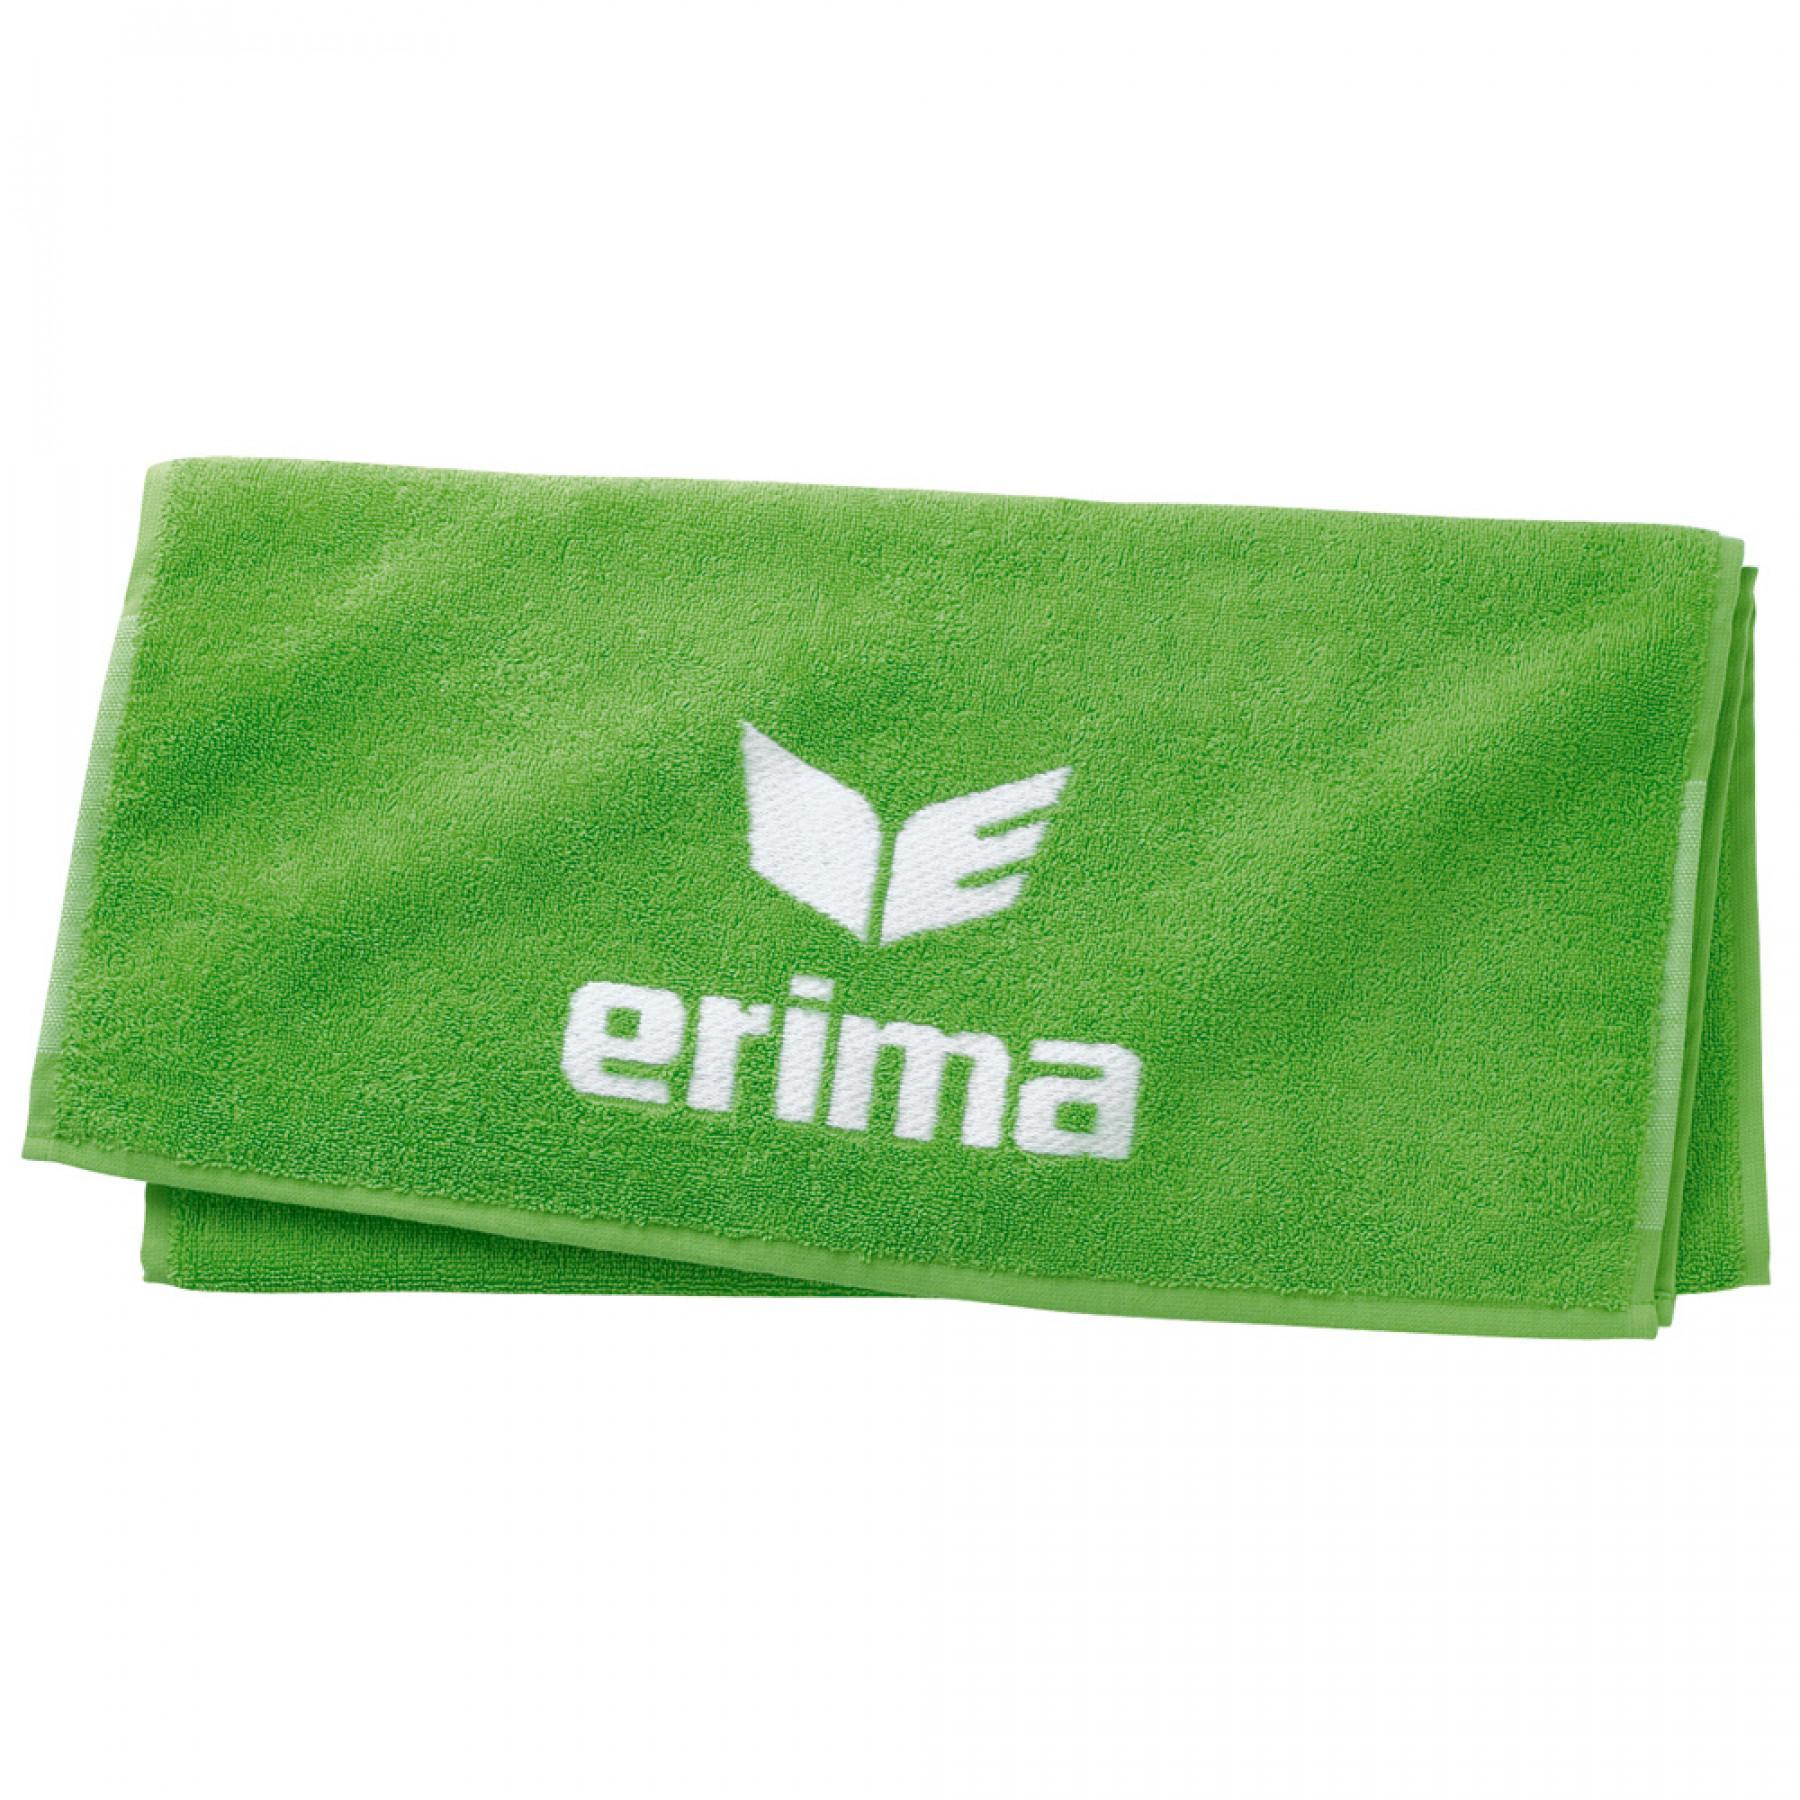 Towel Erima 